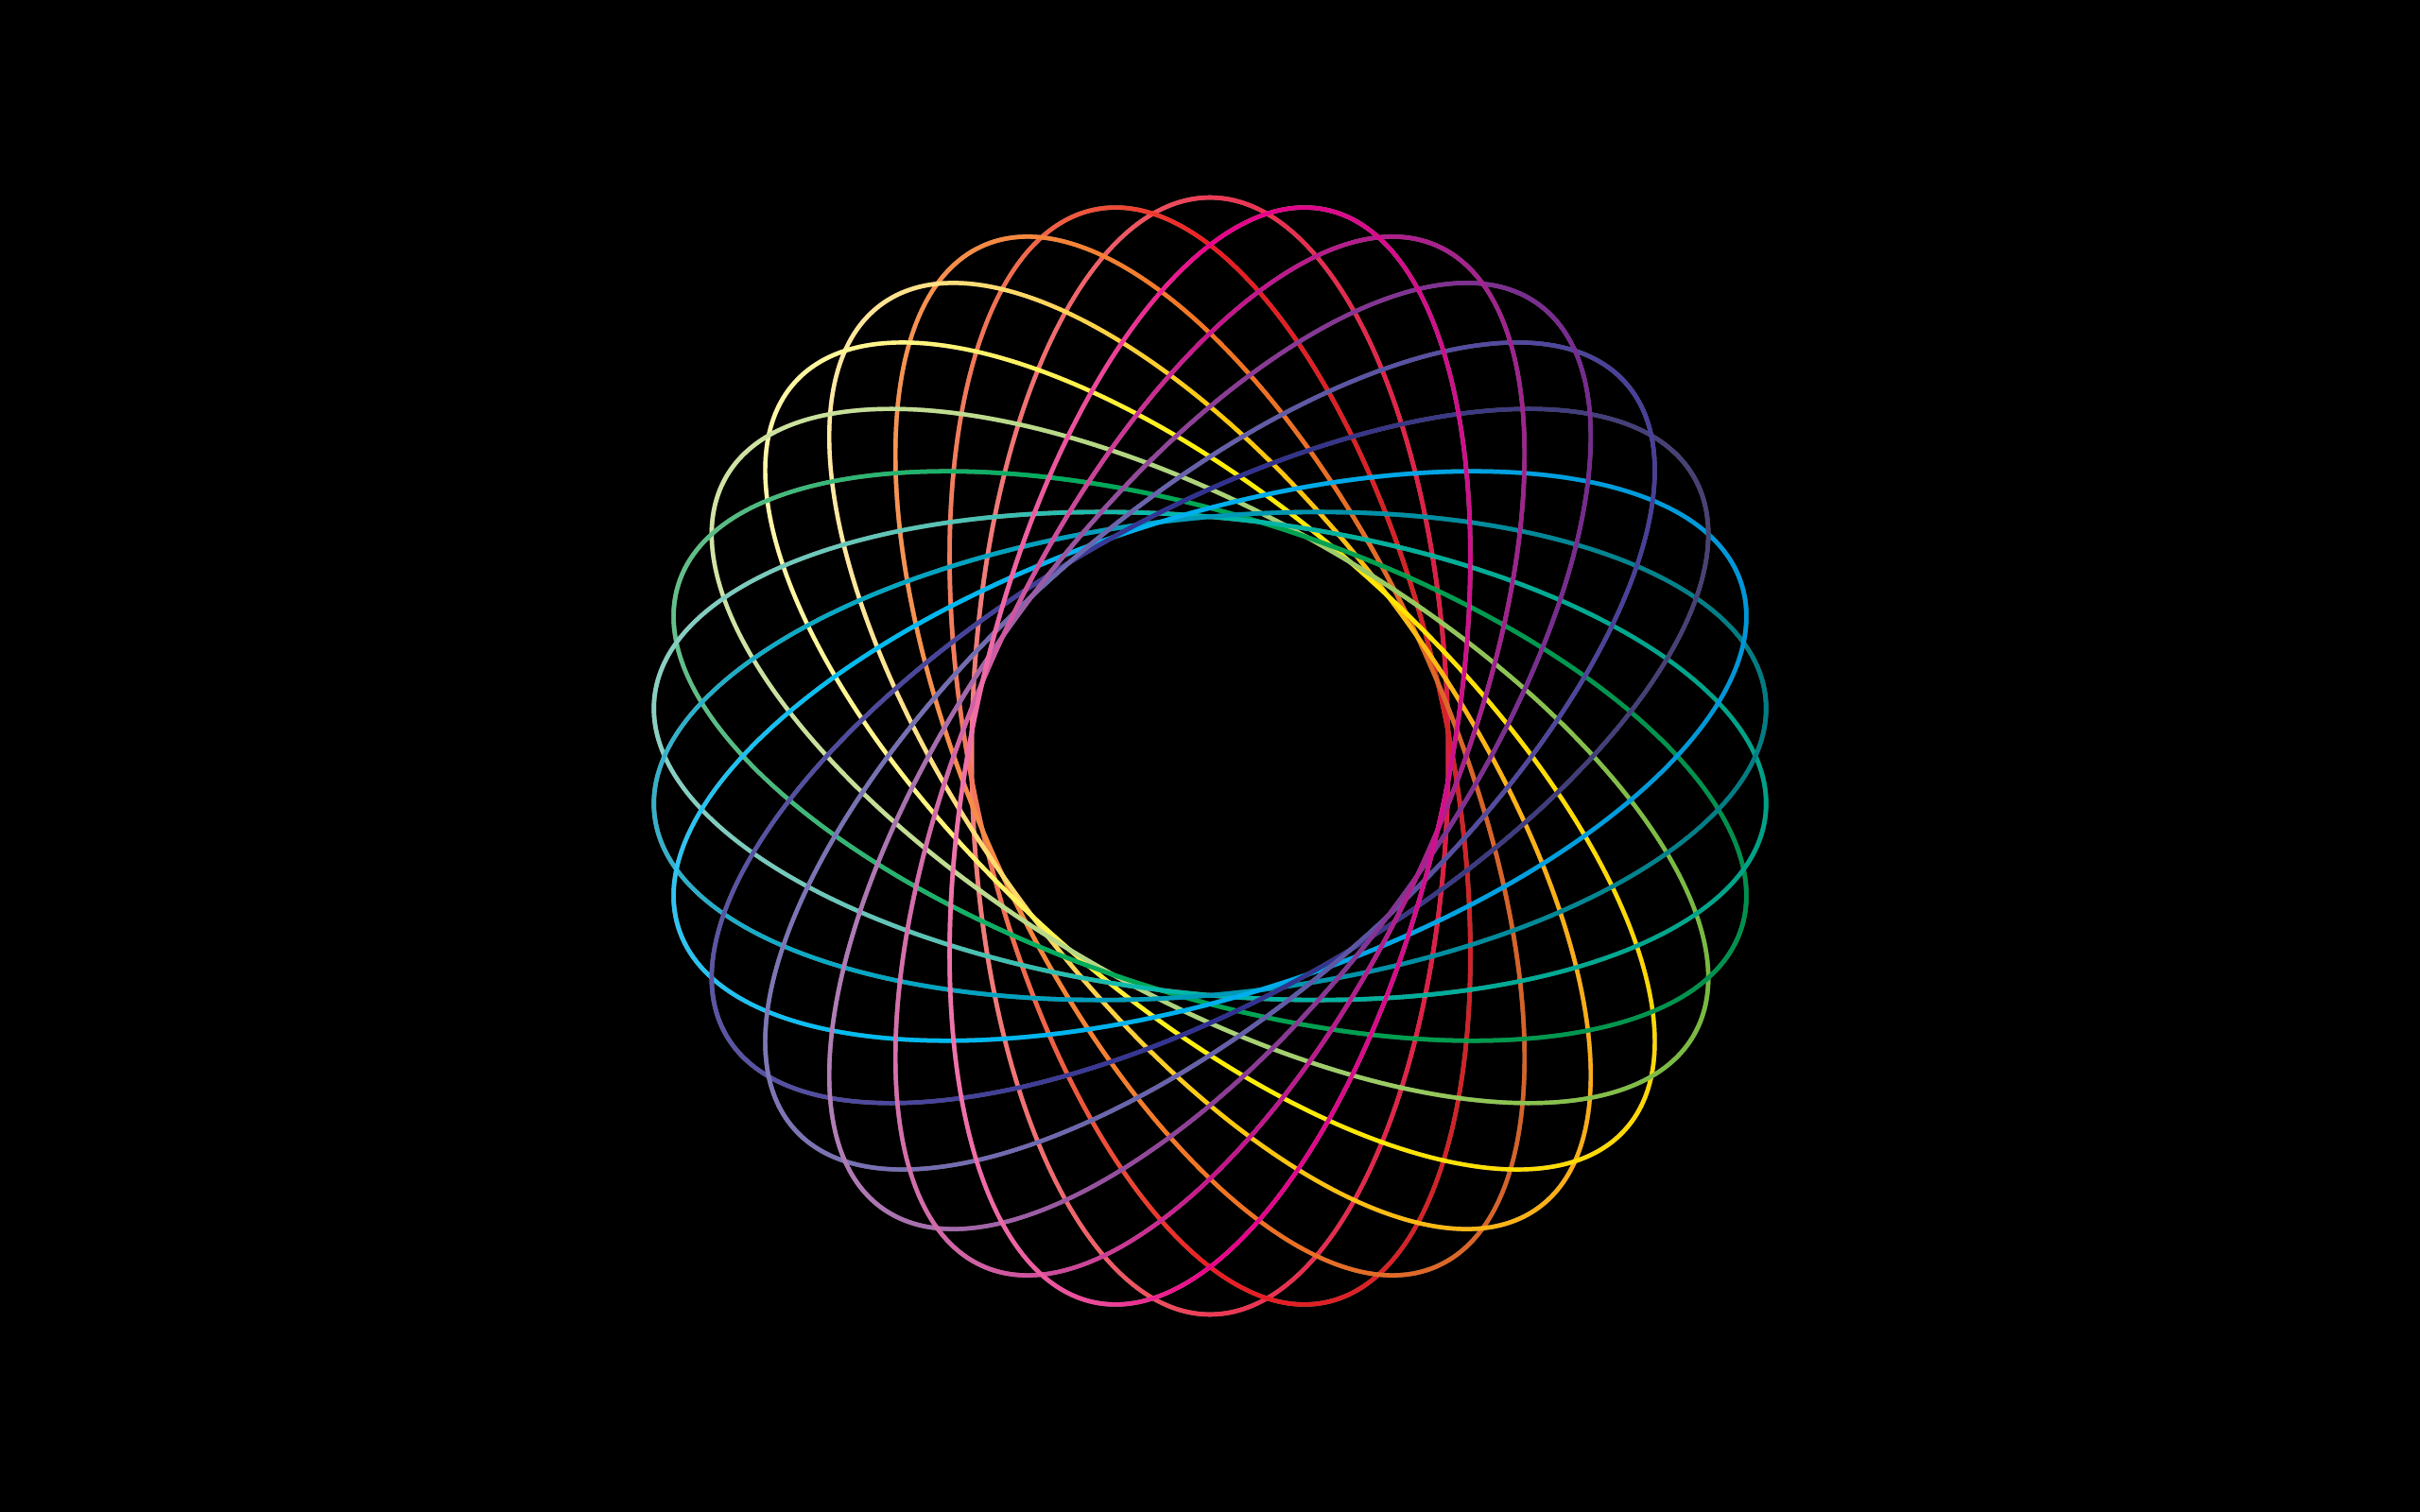 General 2560x1600 minimalism colorful digital art simple background black background sphere lines gradient